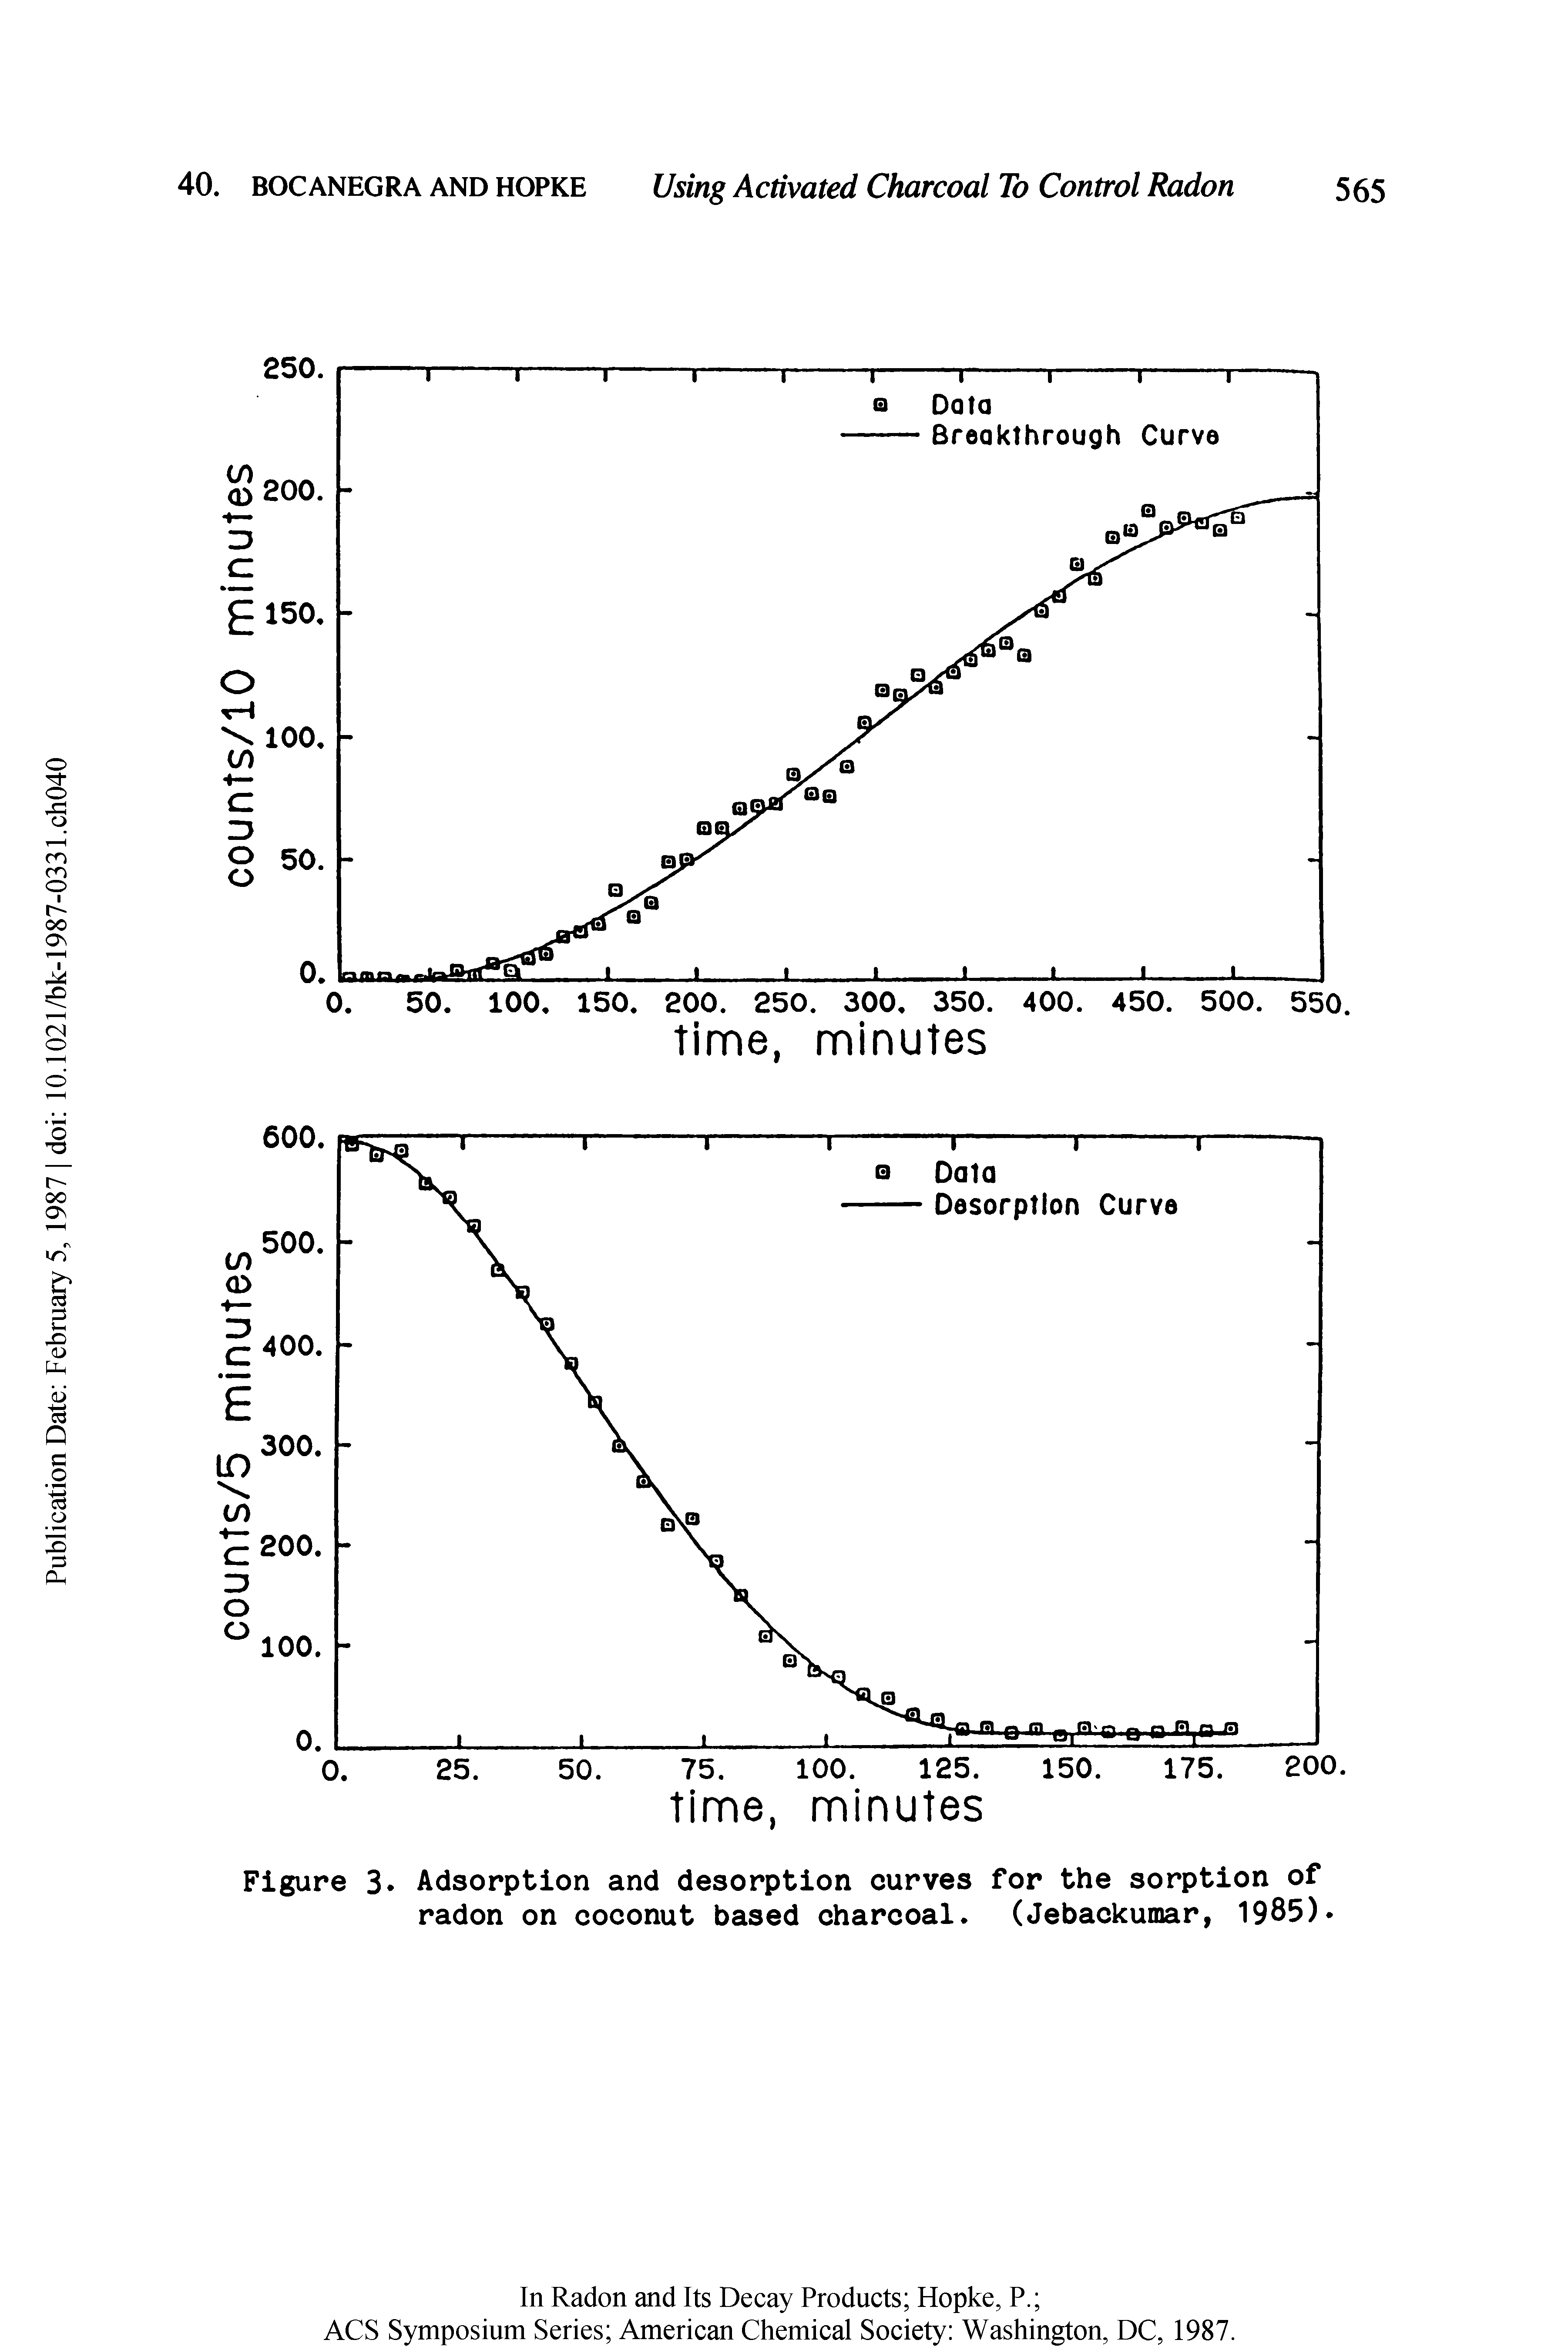 Figure 3 Adsorption and desorption curves for the sorption of radon on coconut based charcoal. (Jebackumar, 1985).